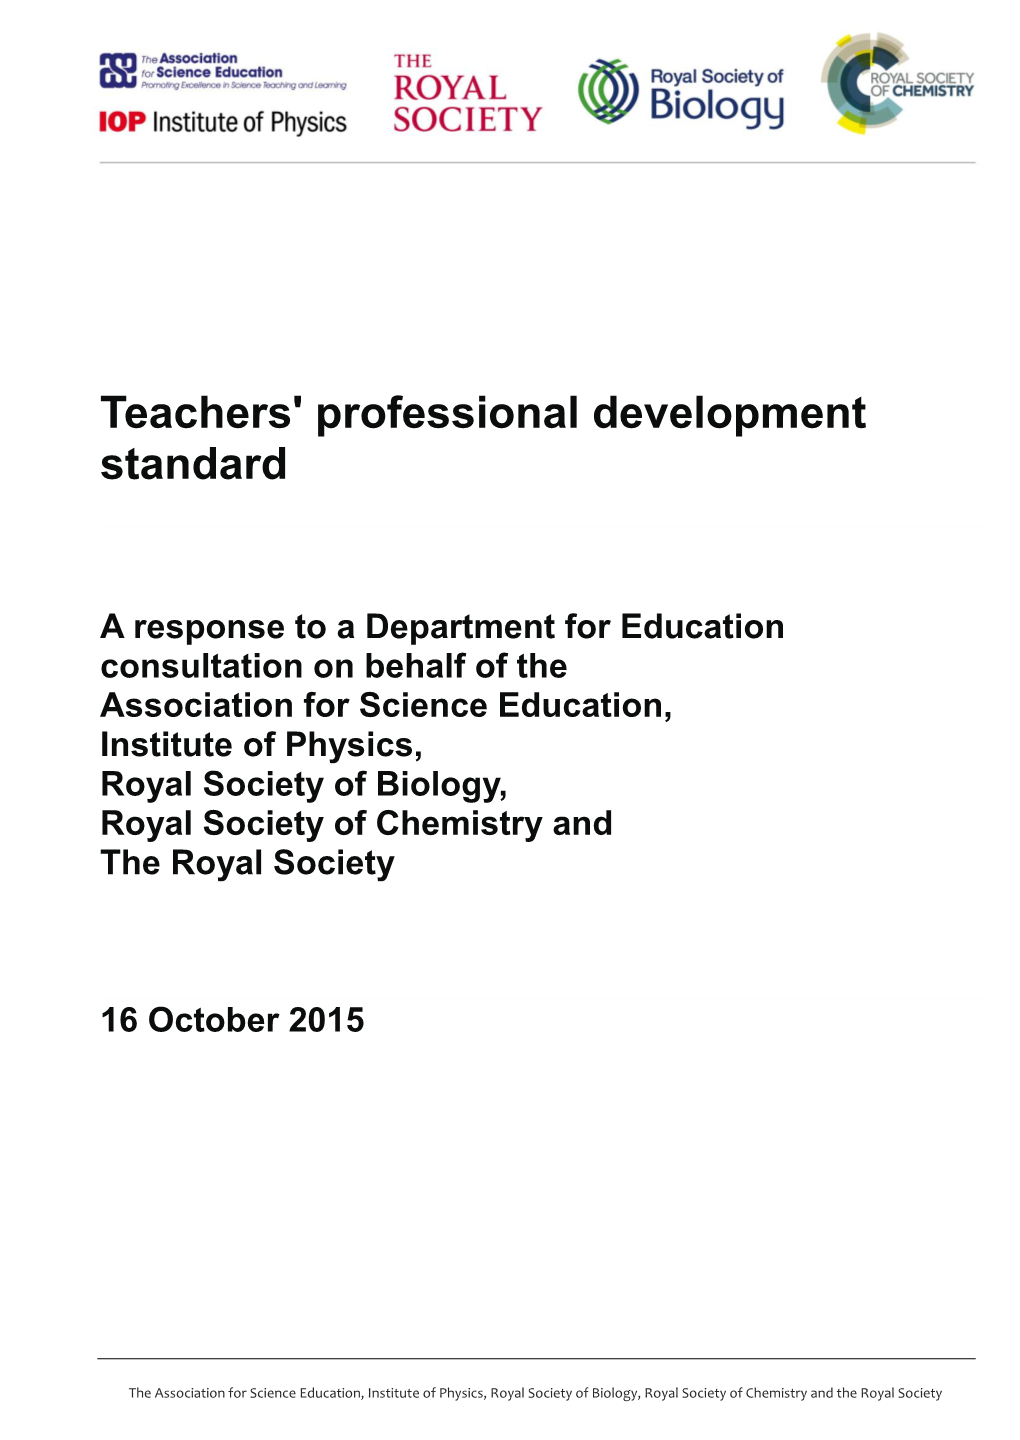 Teachers' Professional Development Standard